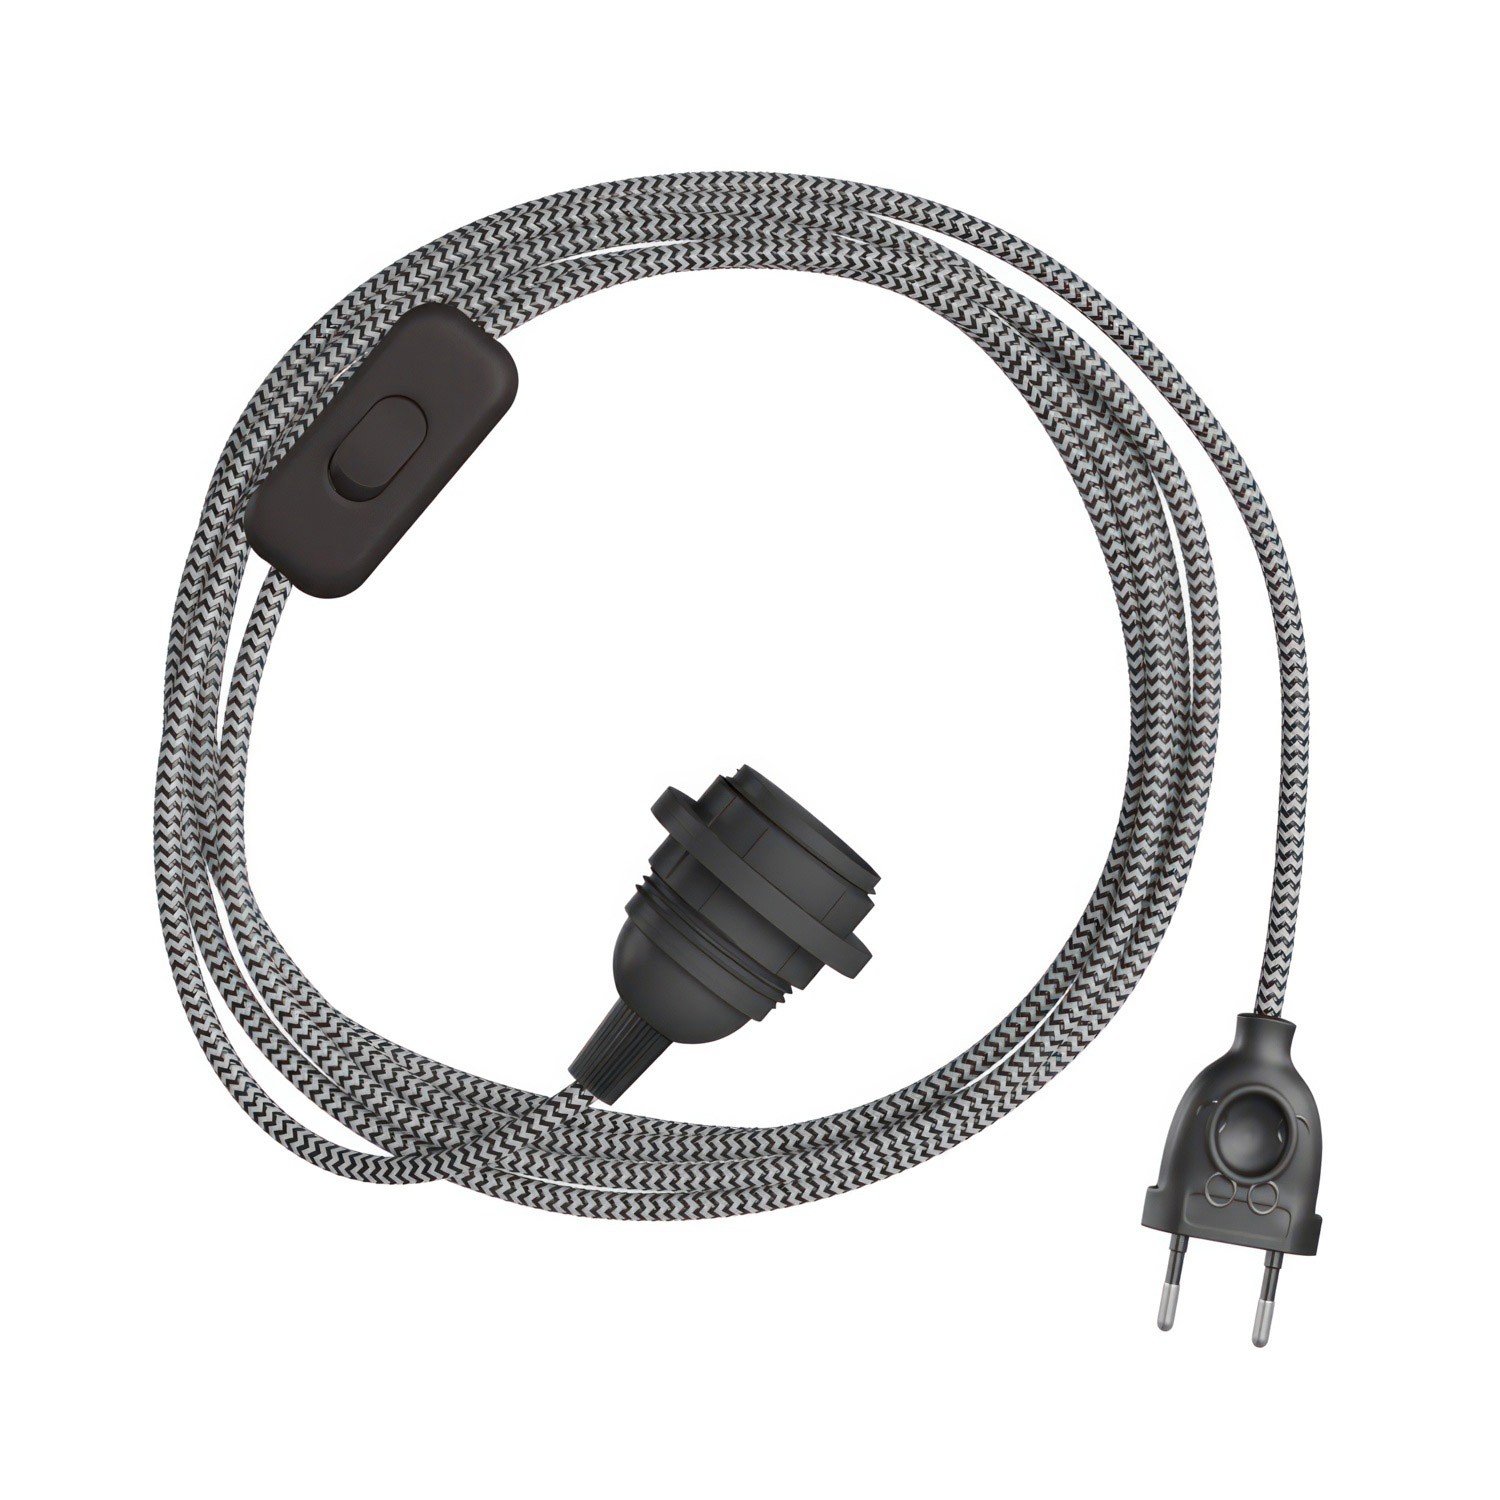 SnakeBis Zig-Zag para pantalla - Mazo de cables con portalámparas, cable de tela Zig-Zag y enchufe de 2 polos